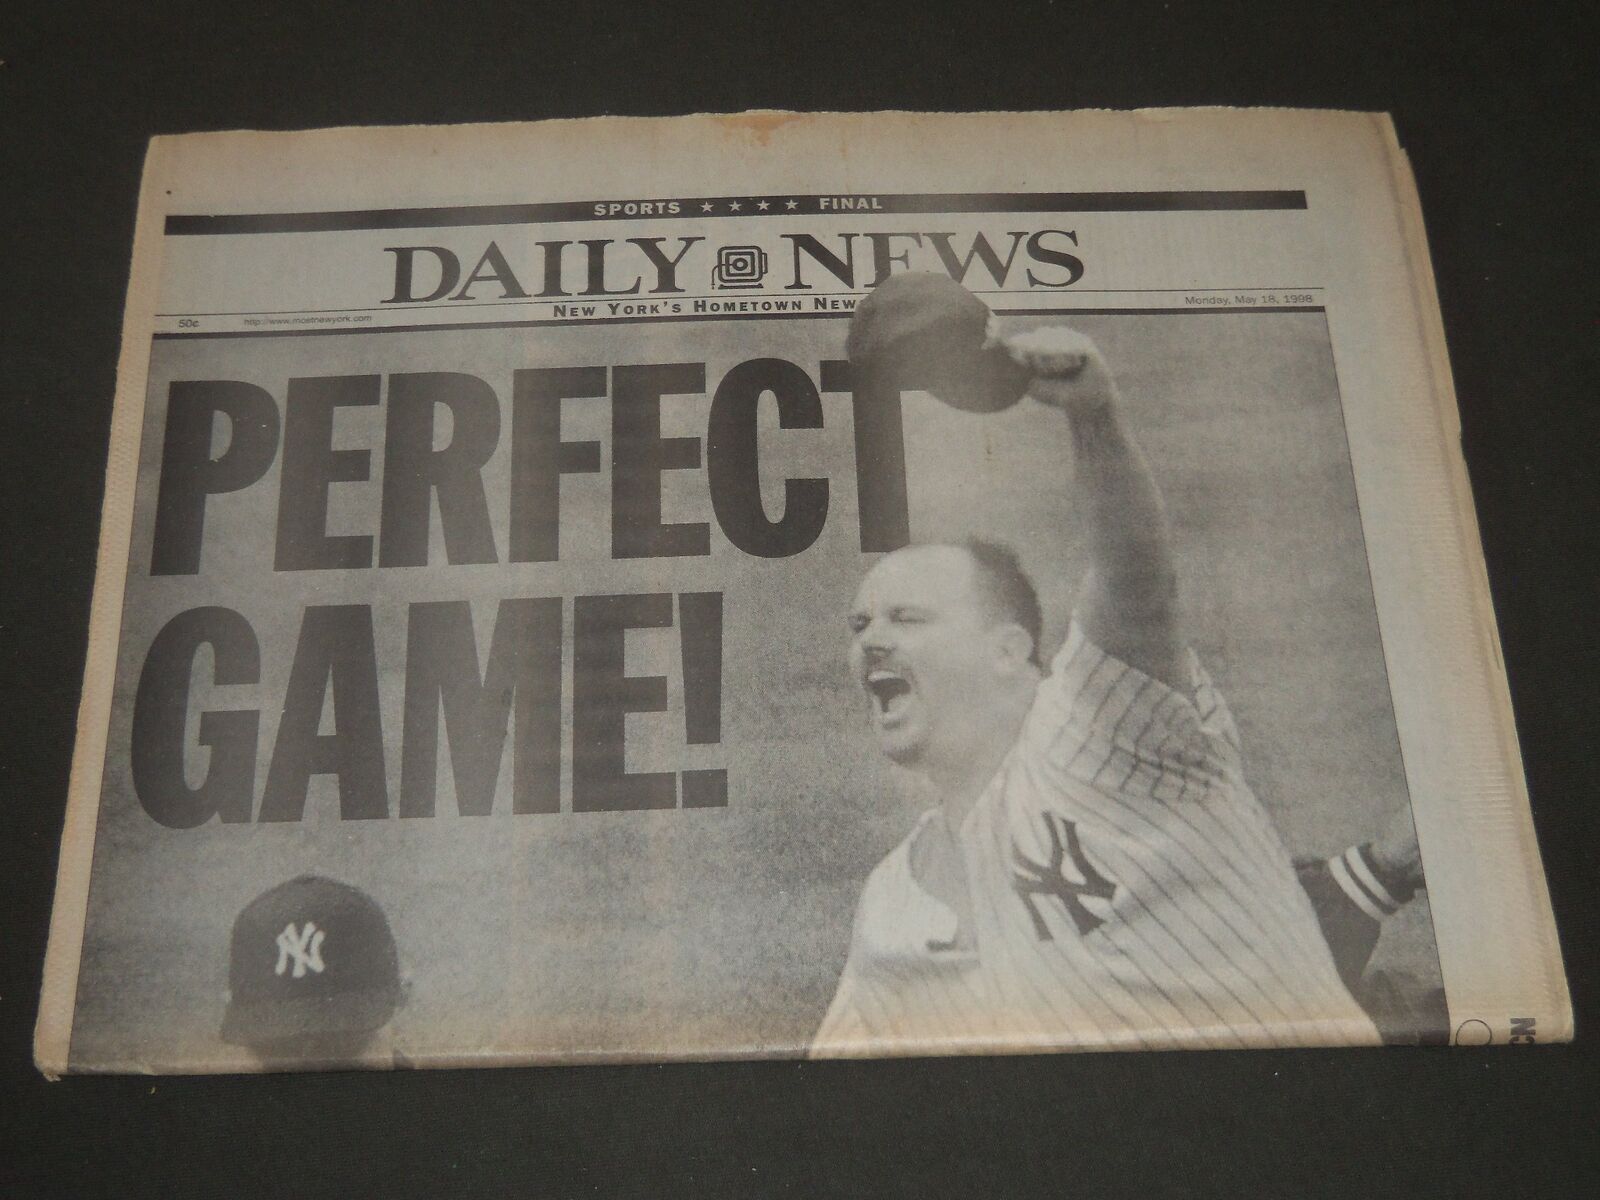 1998 MAY 18 NY DAILY NEWS NEWSPAPER - PERFECT GAME - DAVID WELLS - NP 2539